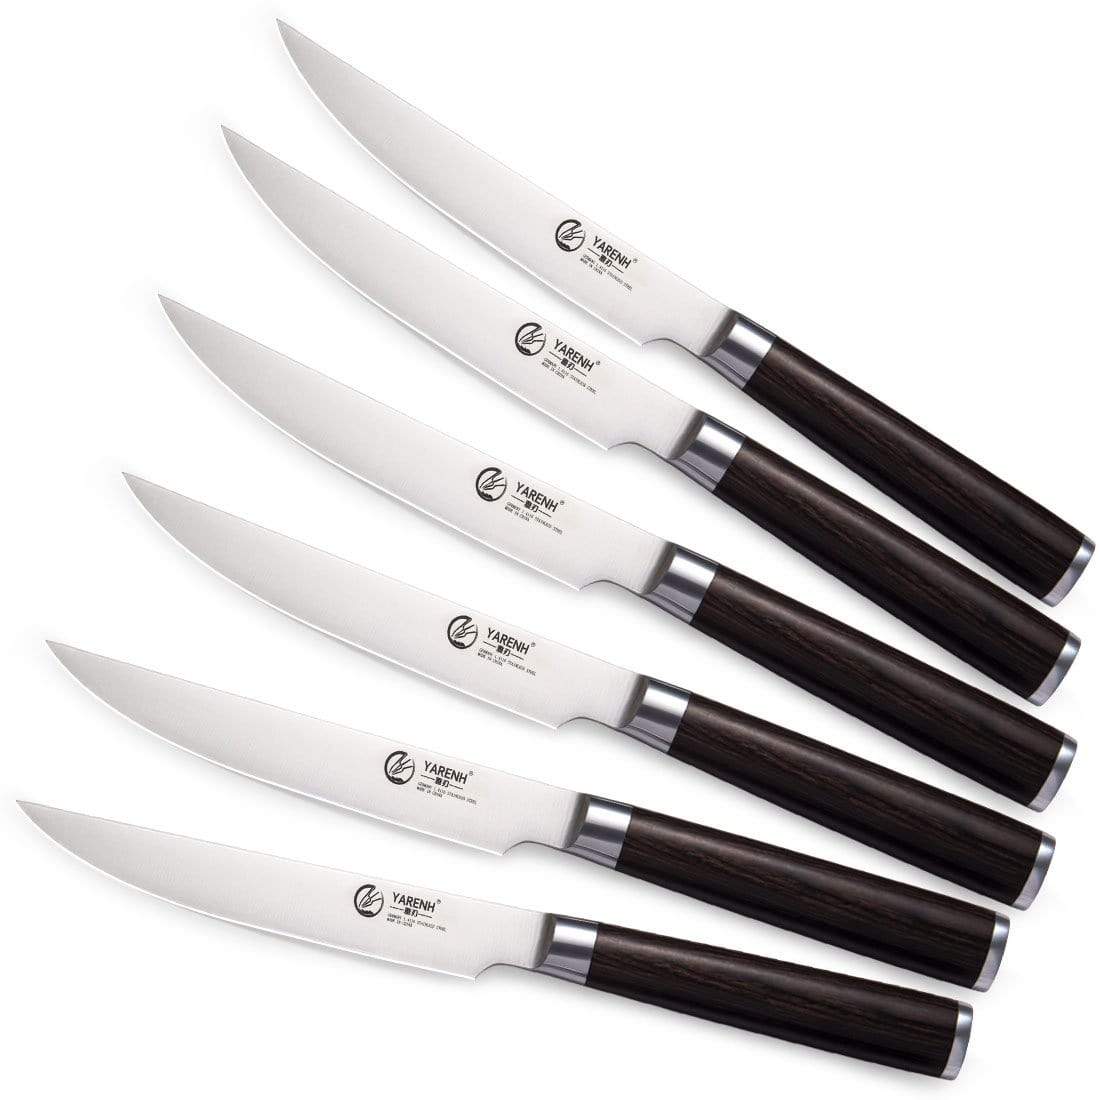 Six Utility/Steak Knives Gift Set